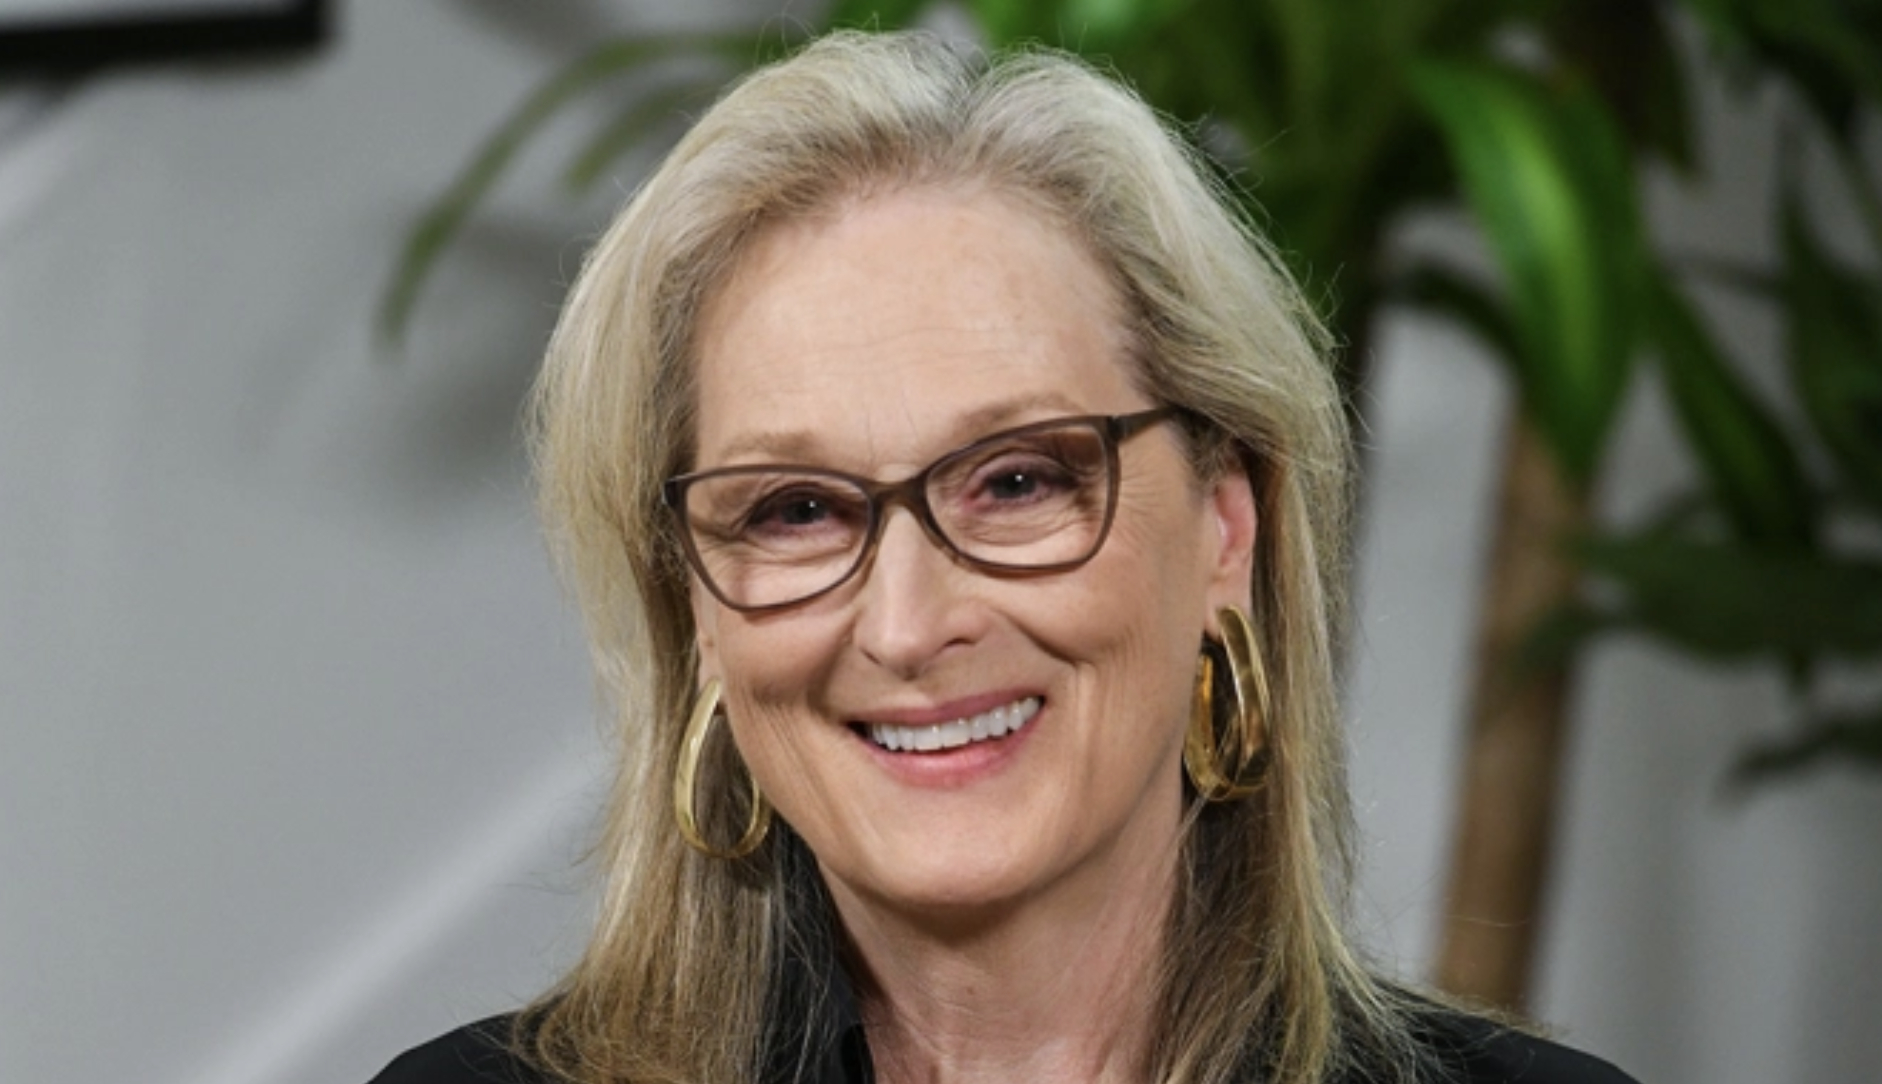 Meryl Streep's mature hairline